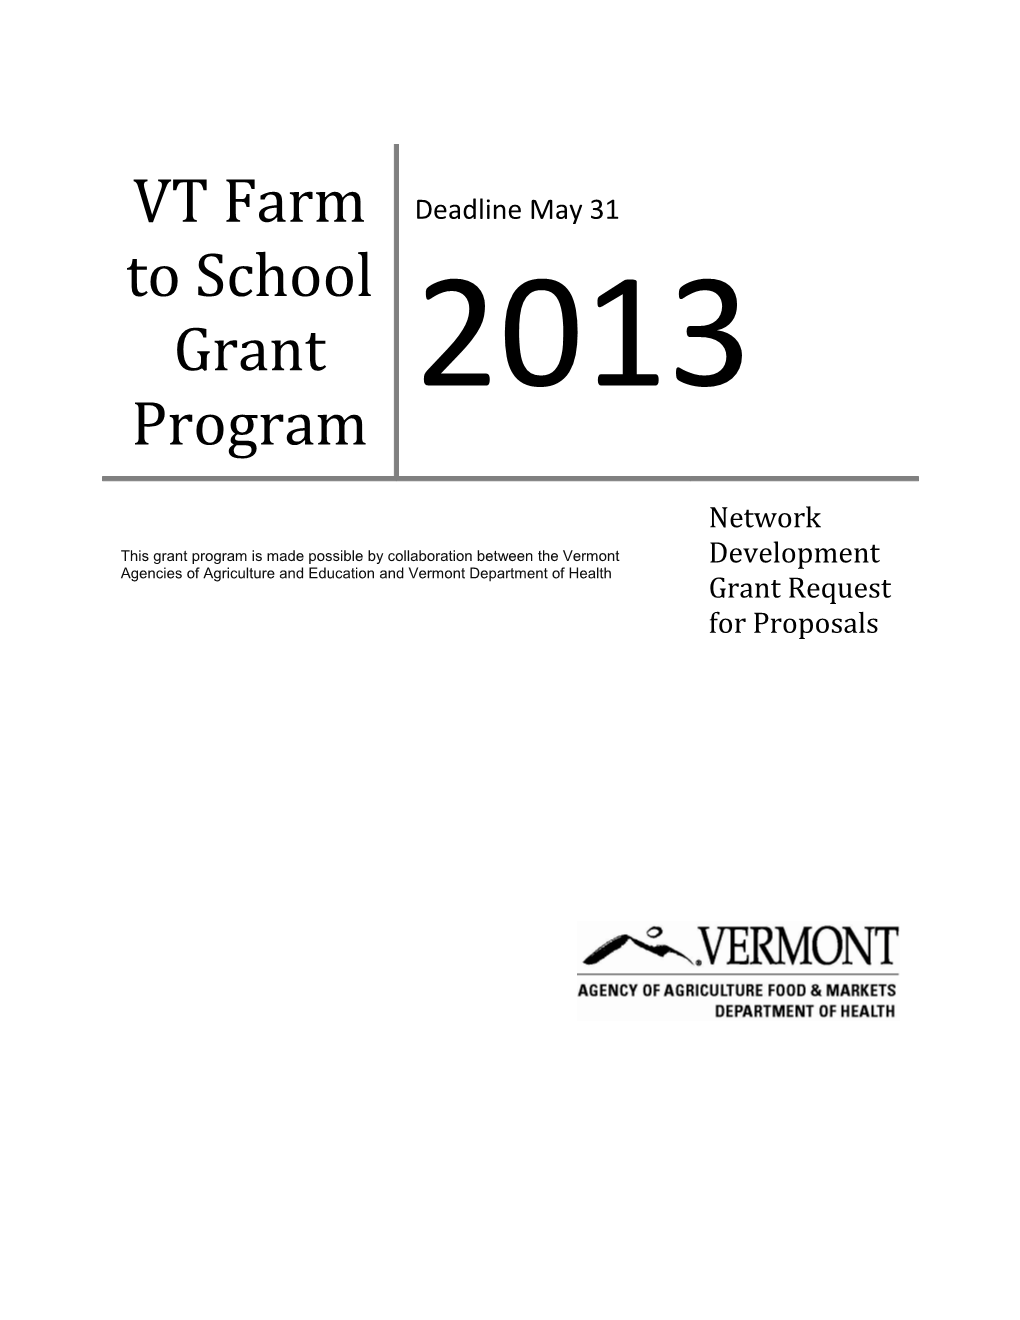 VT Farm to School Grant Program